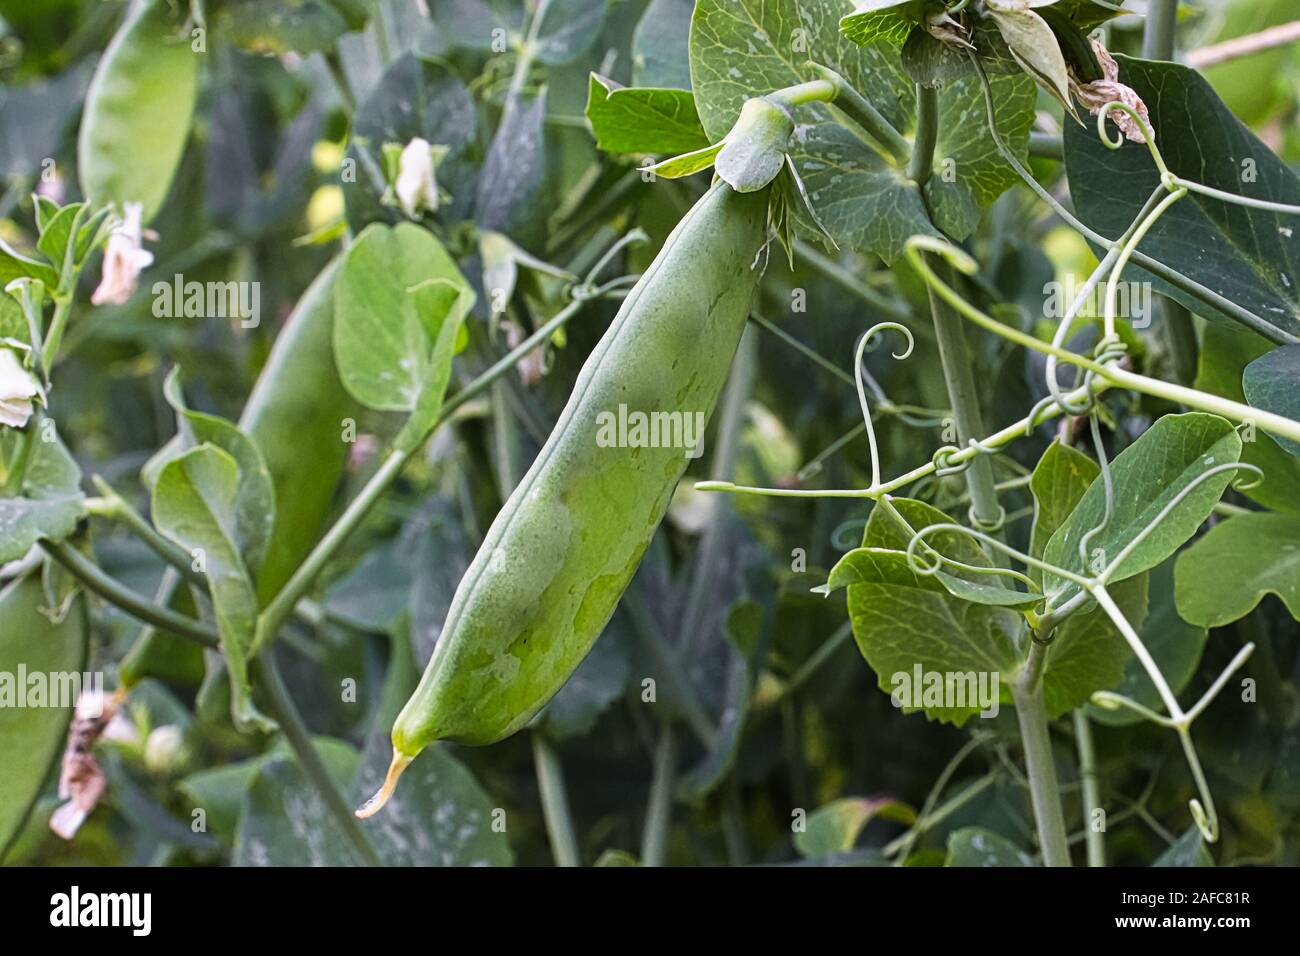 Closeup of a pea pod growing on a vine Stock Photo